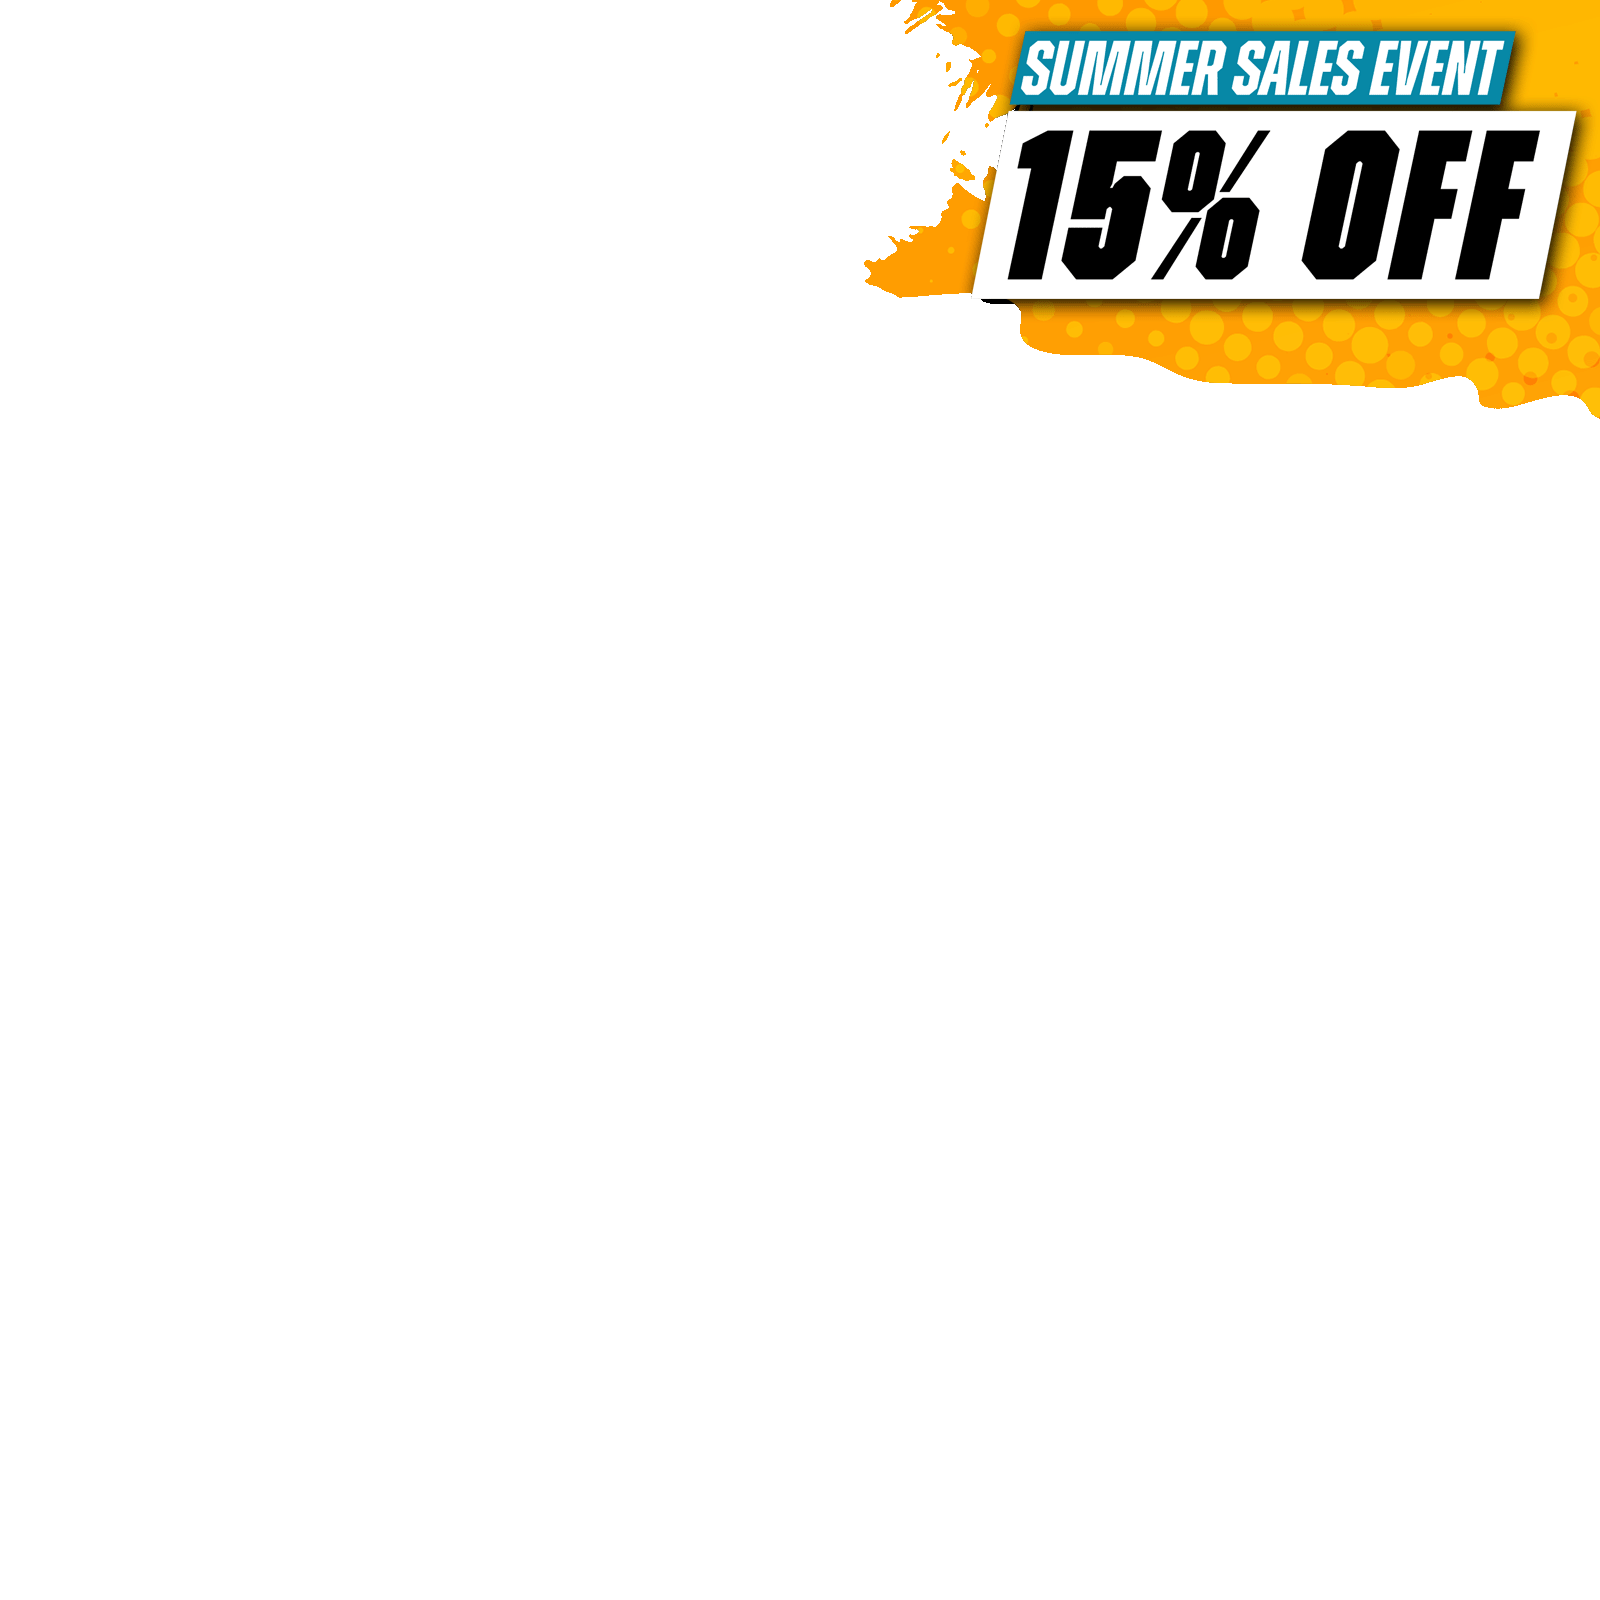 Sale-Overlay-Image